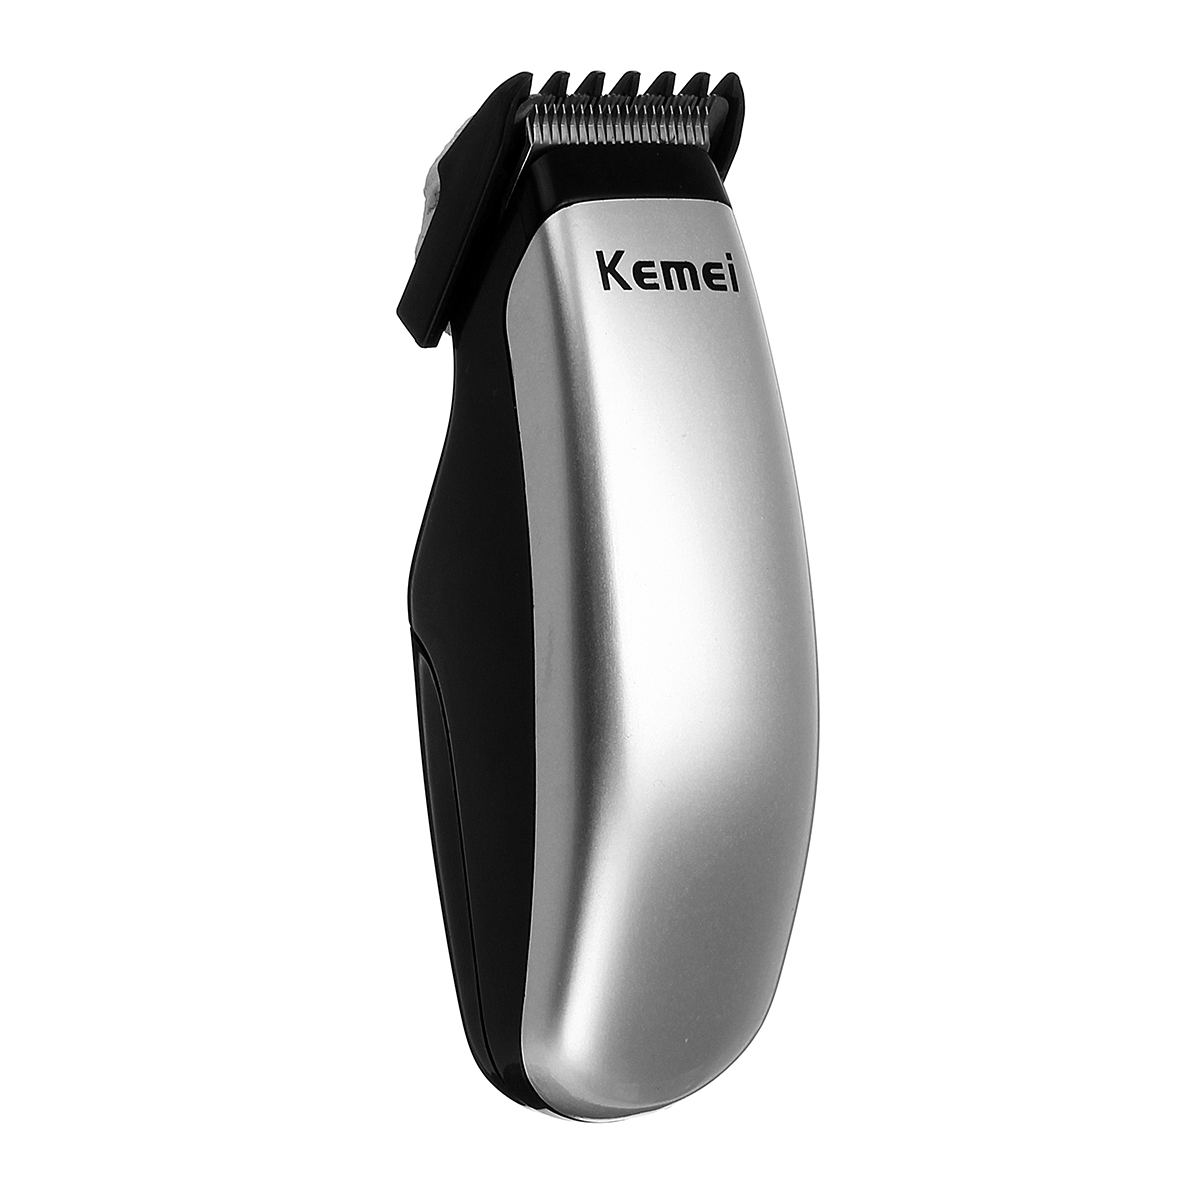 Kemei-KM-666-Electric-Hair-Clipper-Mini-Hair-Trimmer-Cutting-Machine-Beard-Barber-Razor-For-Men-Styl-1306193